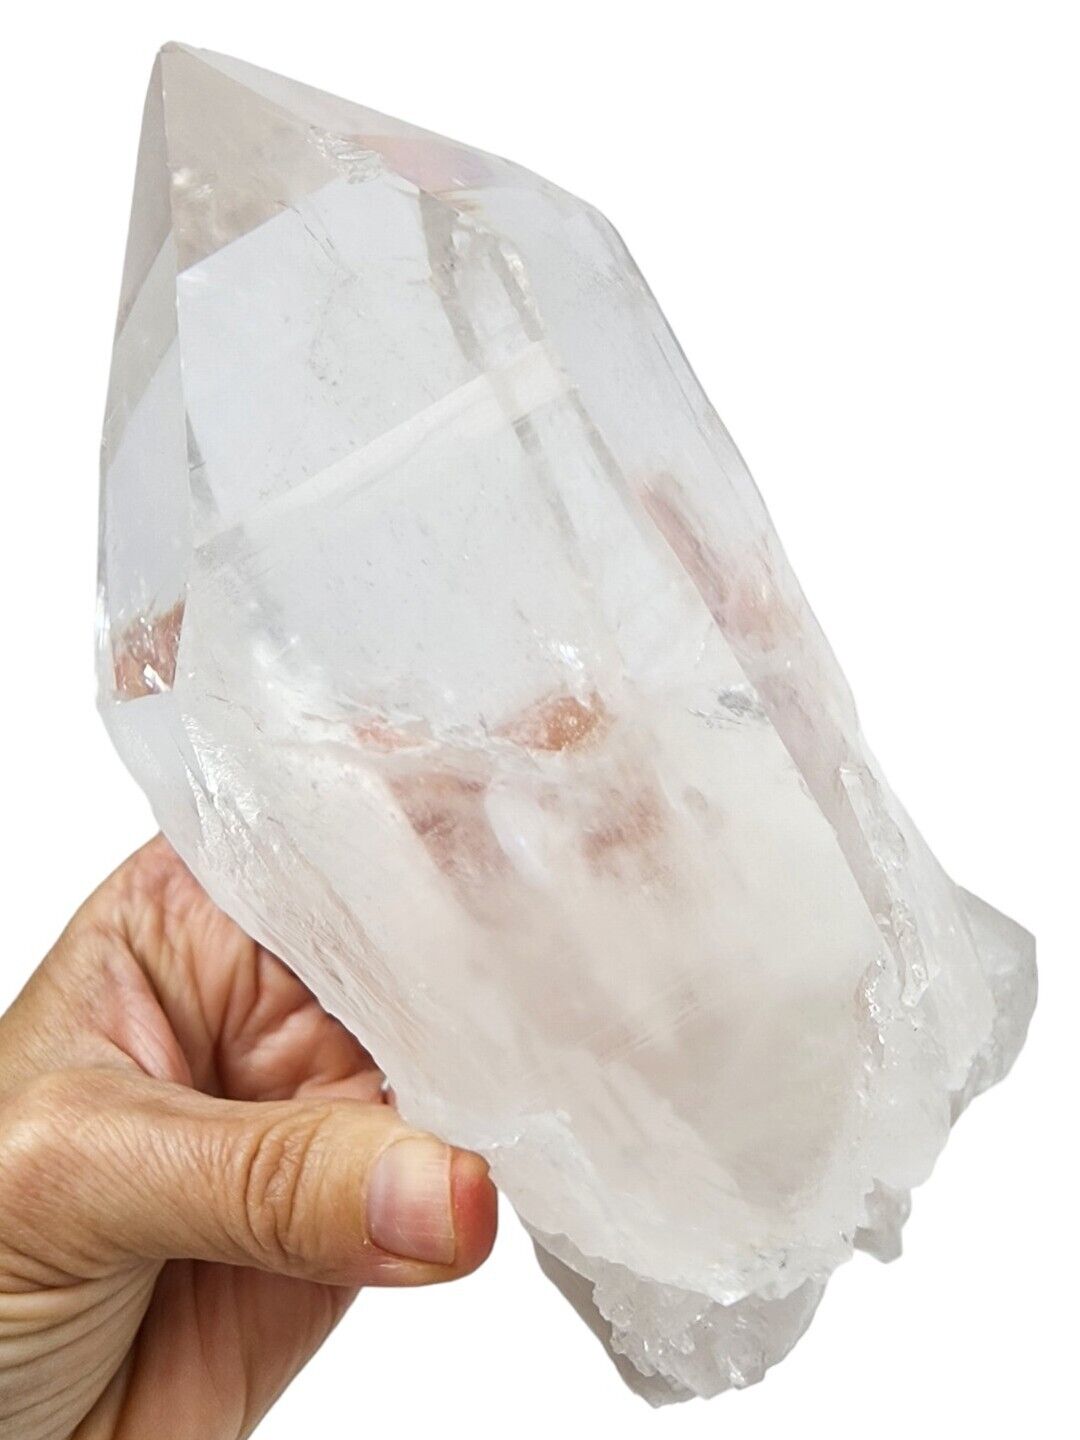 XL Quartz Crystal Natural Point Brazil 2lbs 8.4oz.